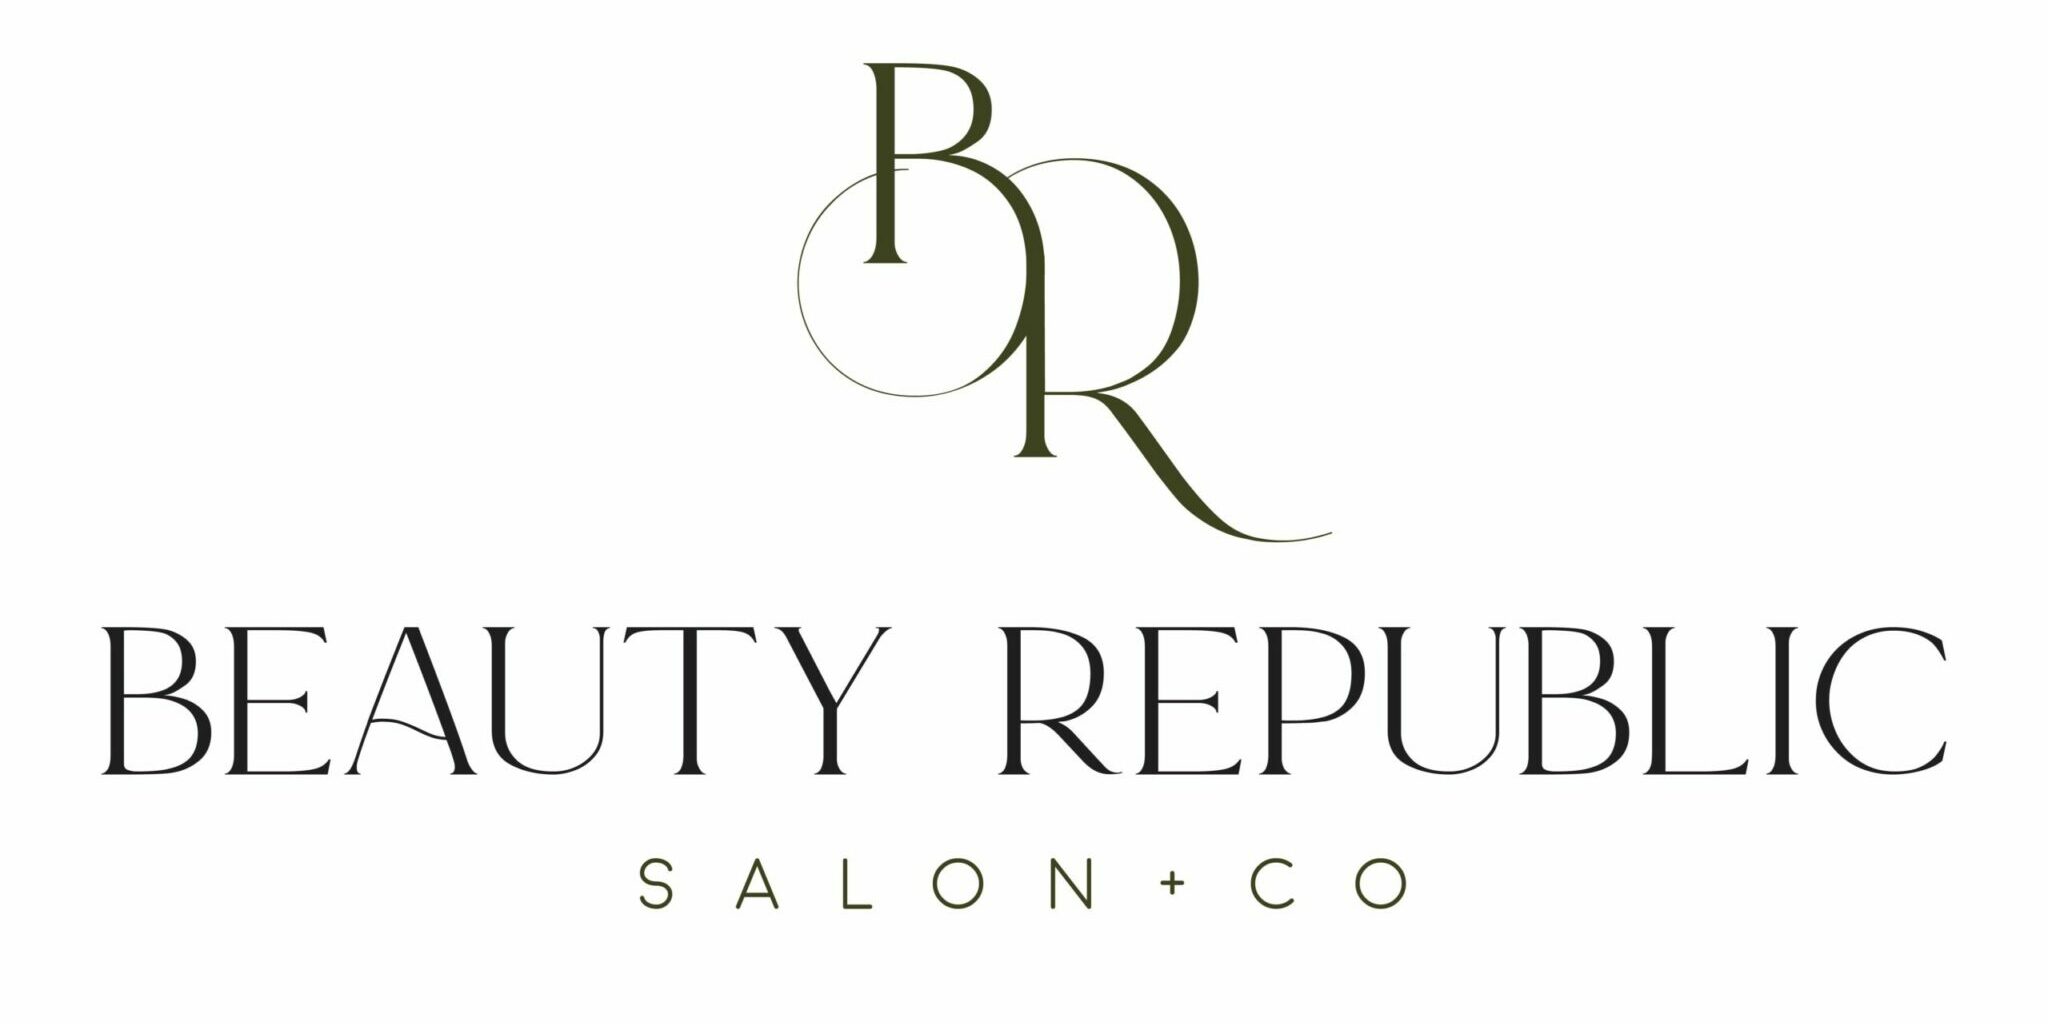 Beauty Republic Salon+Co Logo-01 (1)